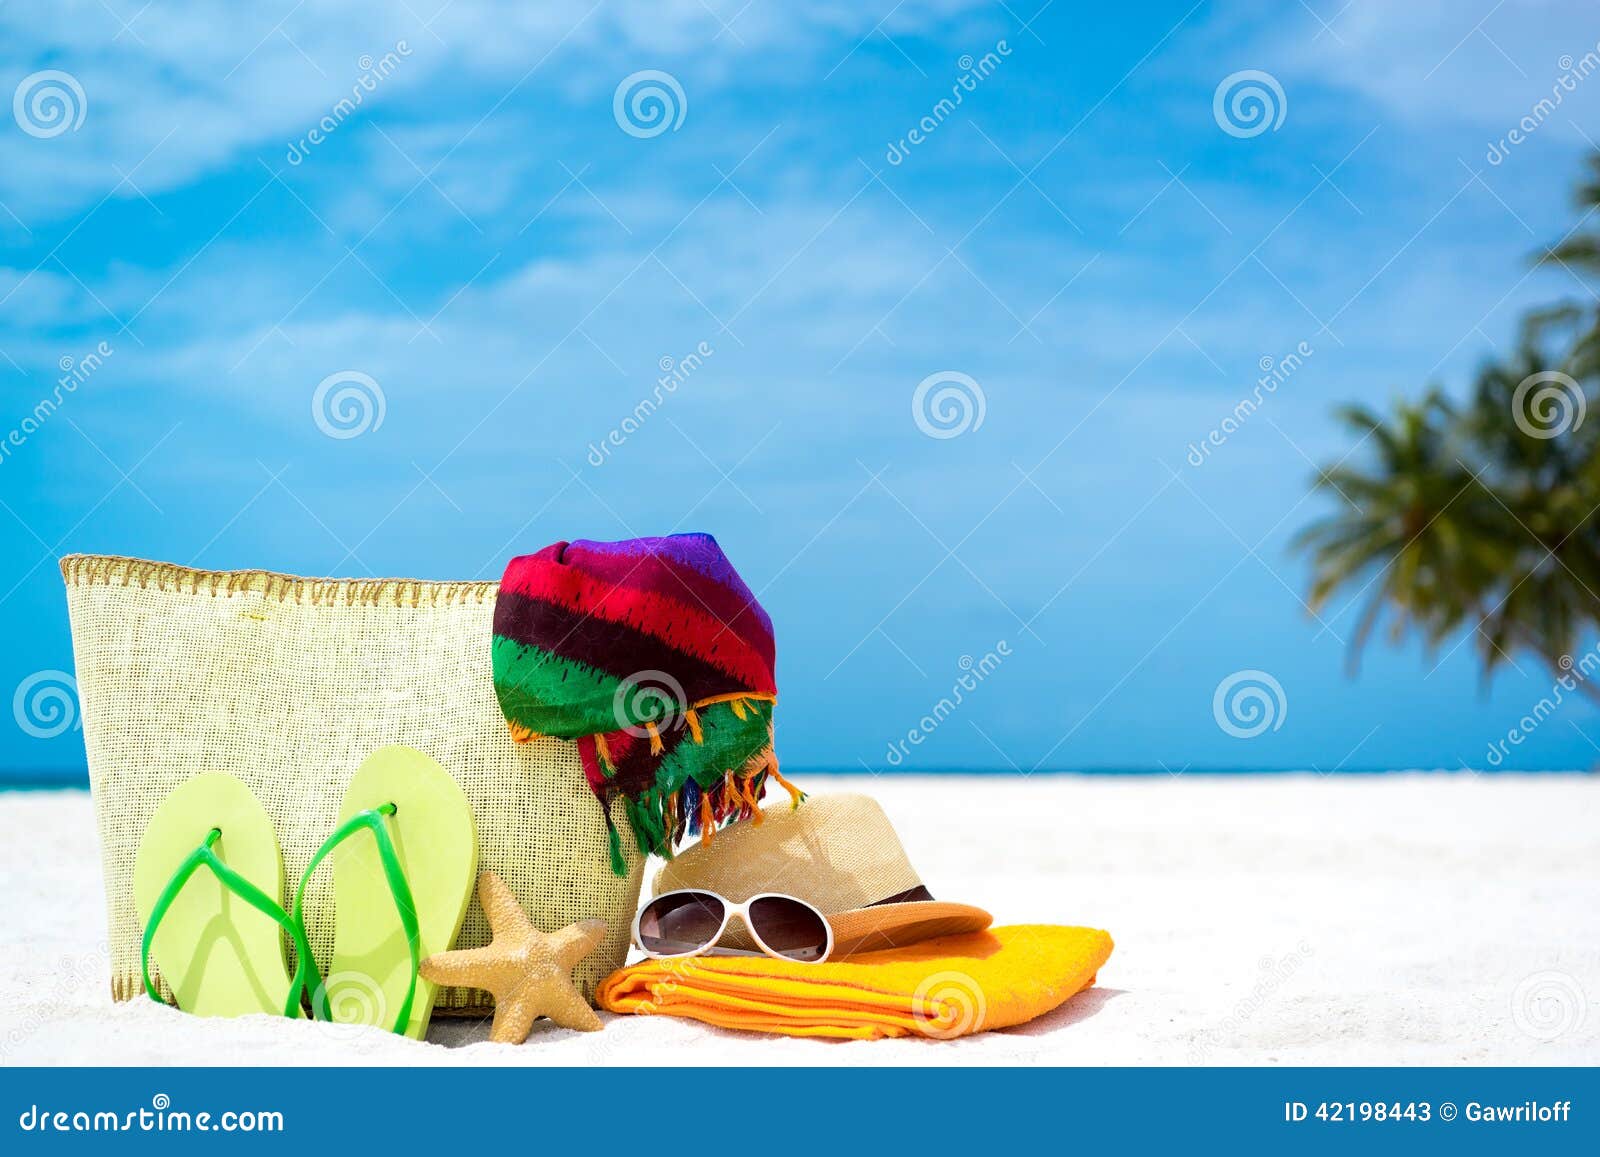 Полотенцем солнцем. Плаж сумка полотенце очки. Полотенце солнечные очки арт. Солнцезащитные очки полотенца солнце загар. Vacation in a warm Country.